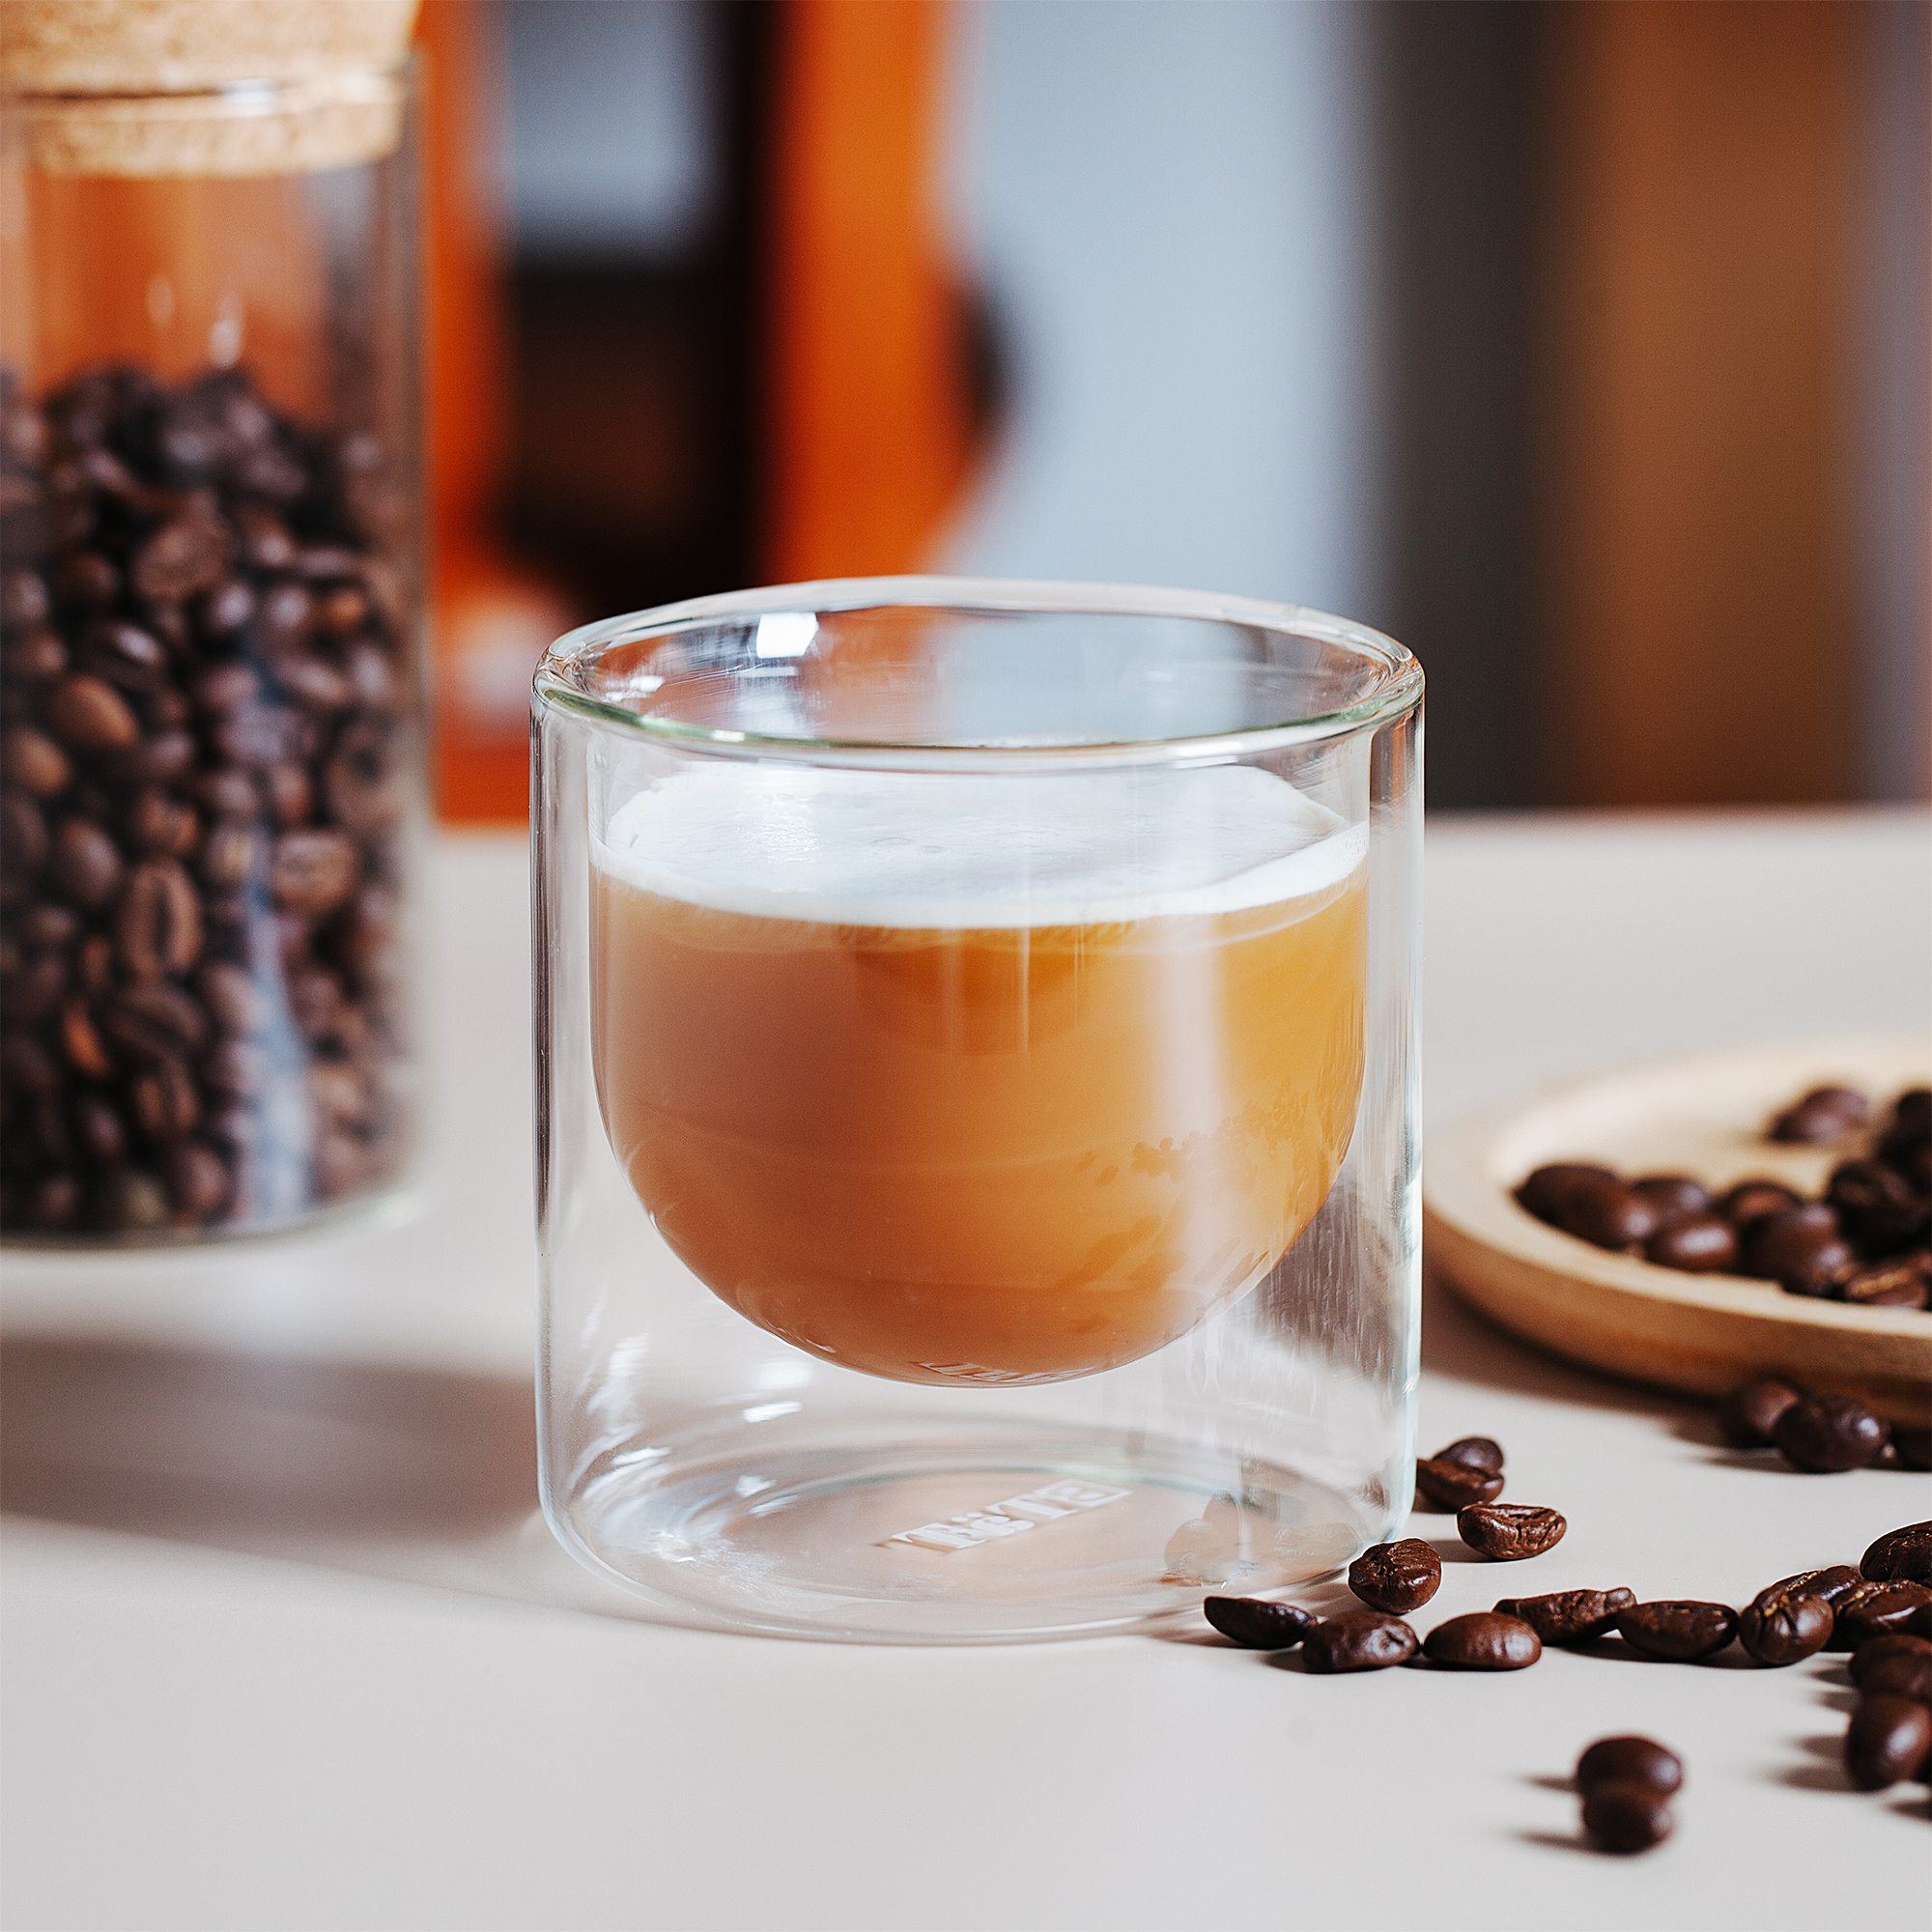 Glass Espresso Cups - Double Wall Insulated Coffee Mugs -  Designed in USA - Set of 2, 5 oz - For Cappuccino, Latte, Tea, Shots -  Borosilicate Glassware - Dishwasher, Microwave Safe - Premium Gift Box:  Liquor Decanters